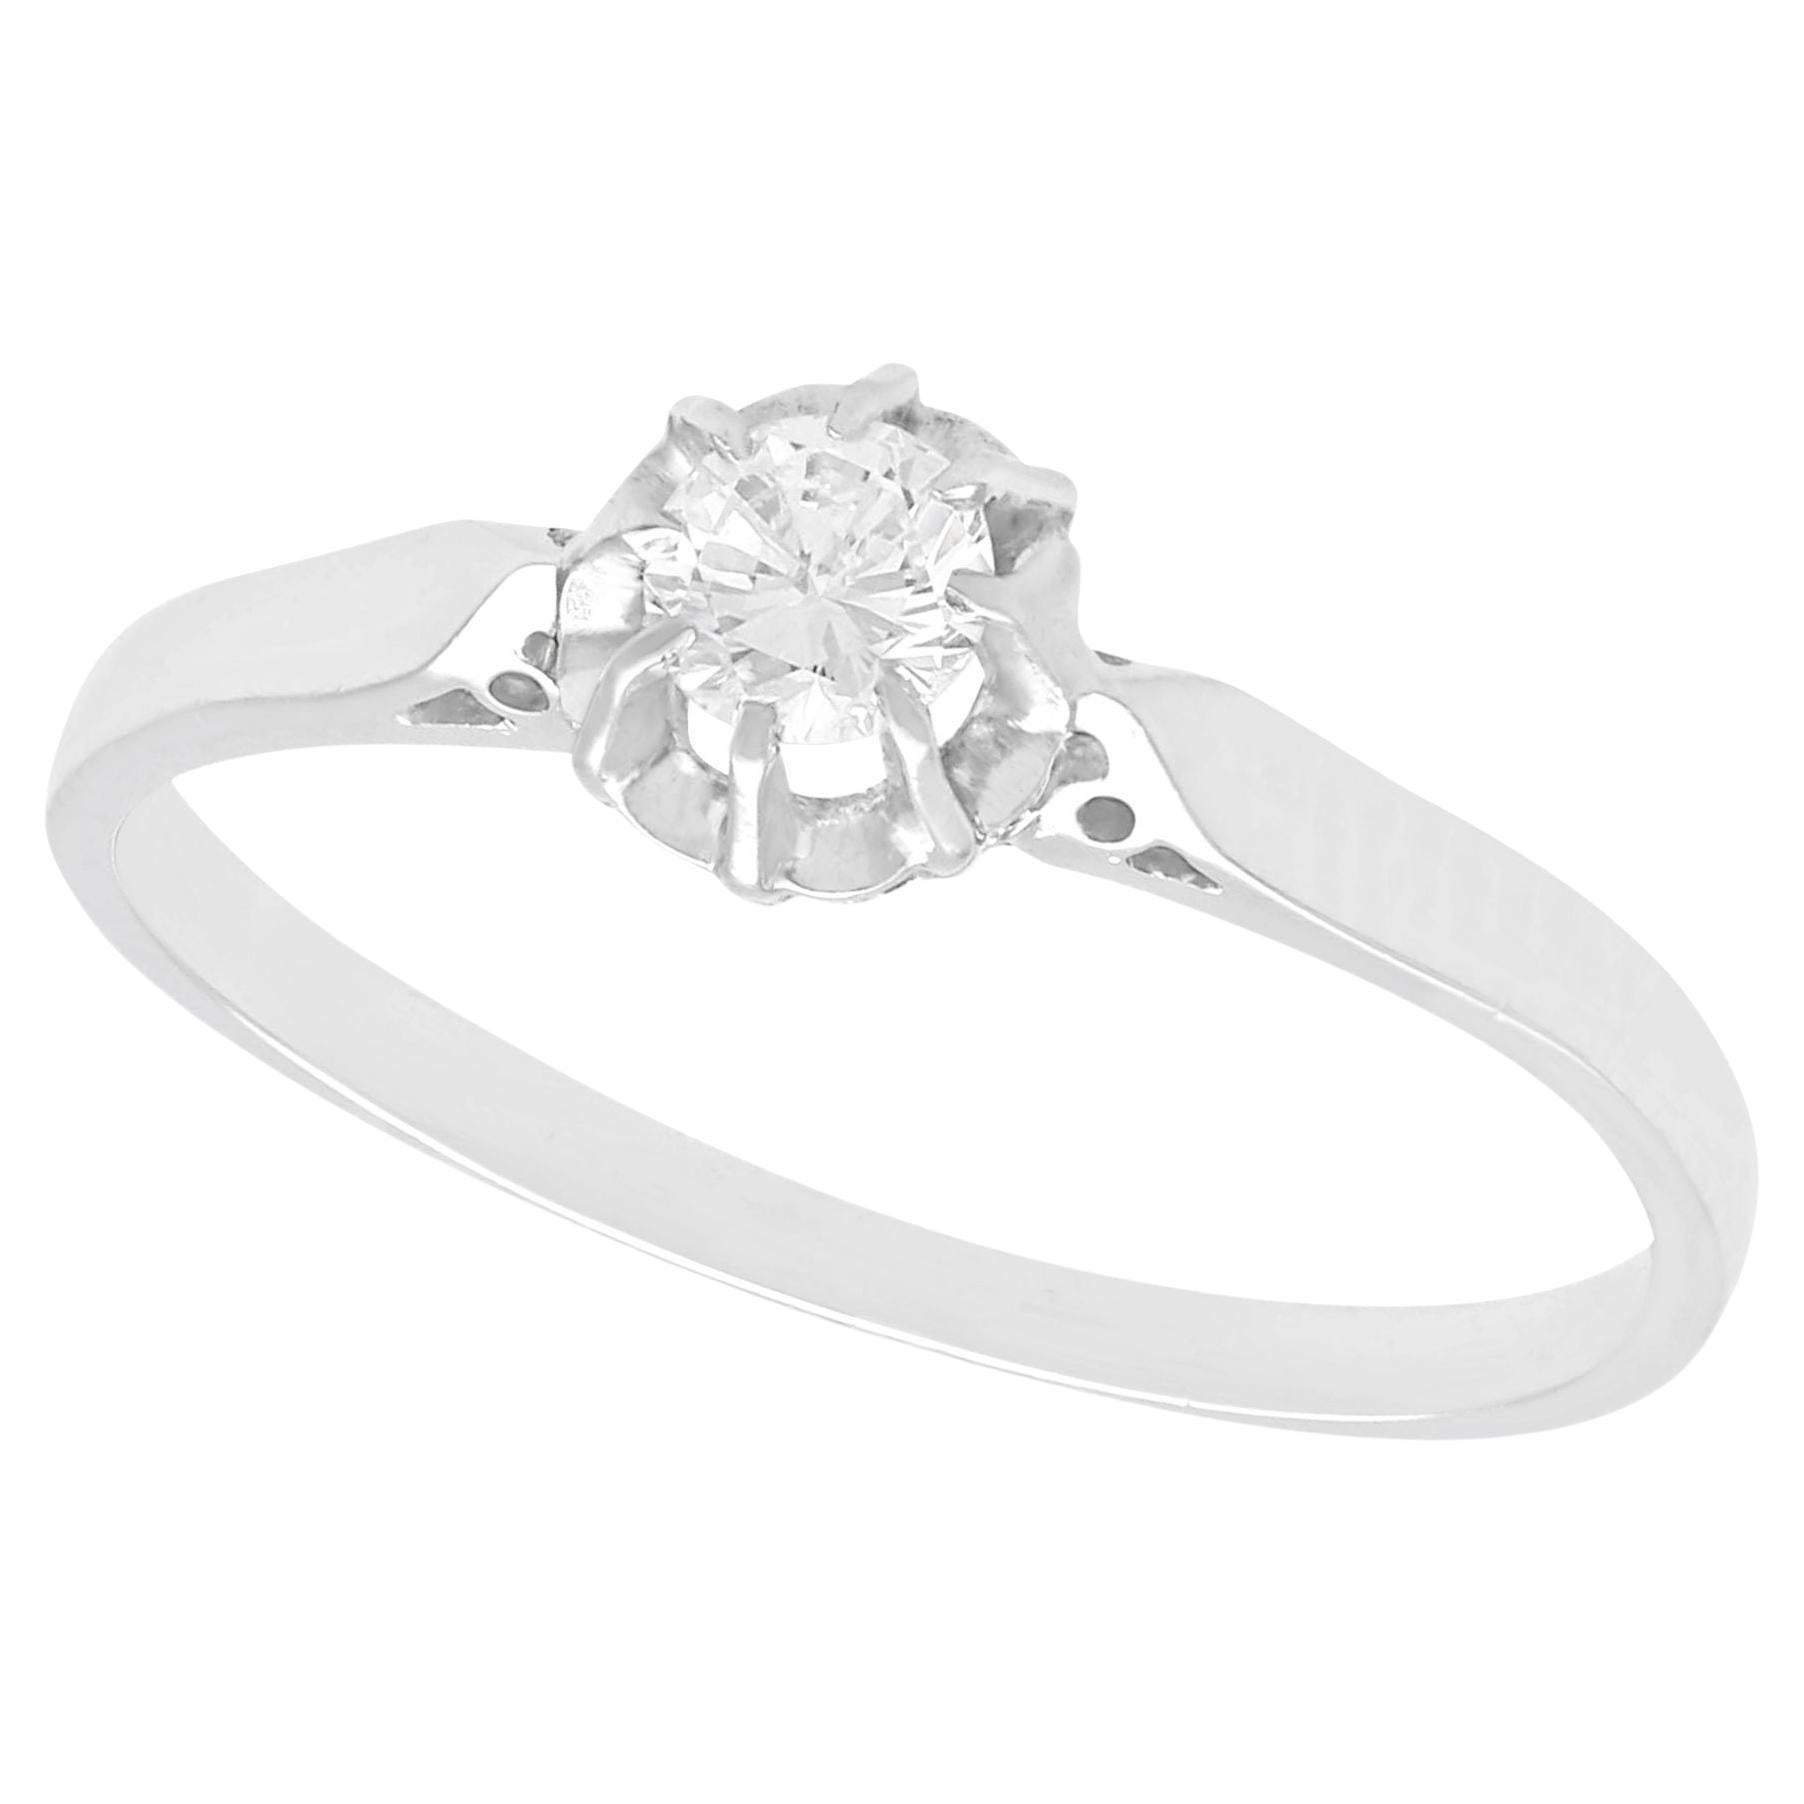 1980s Diamond and Platinum Solitaire Engagement Ring